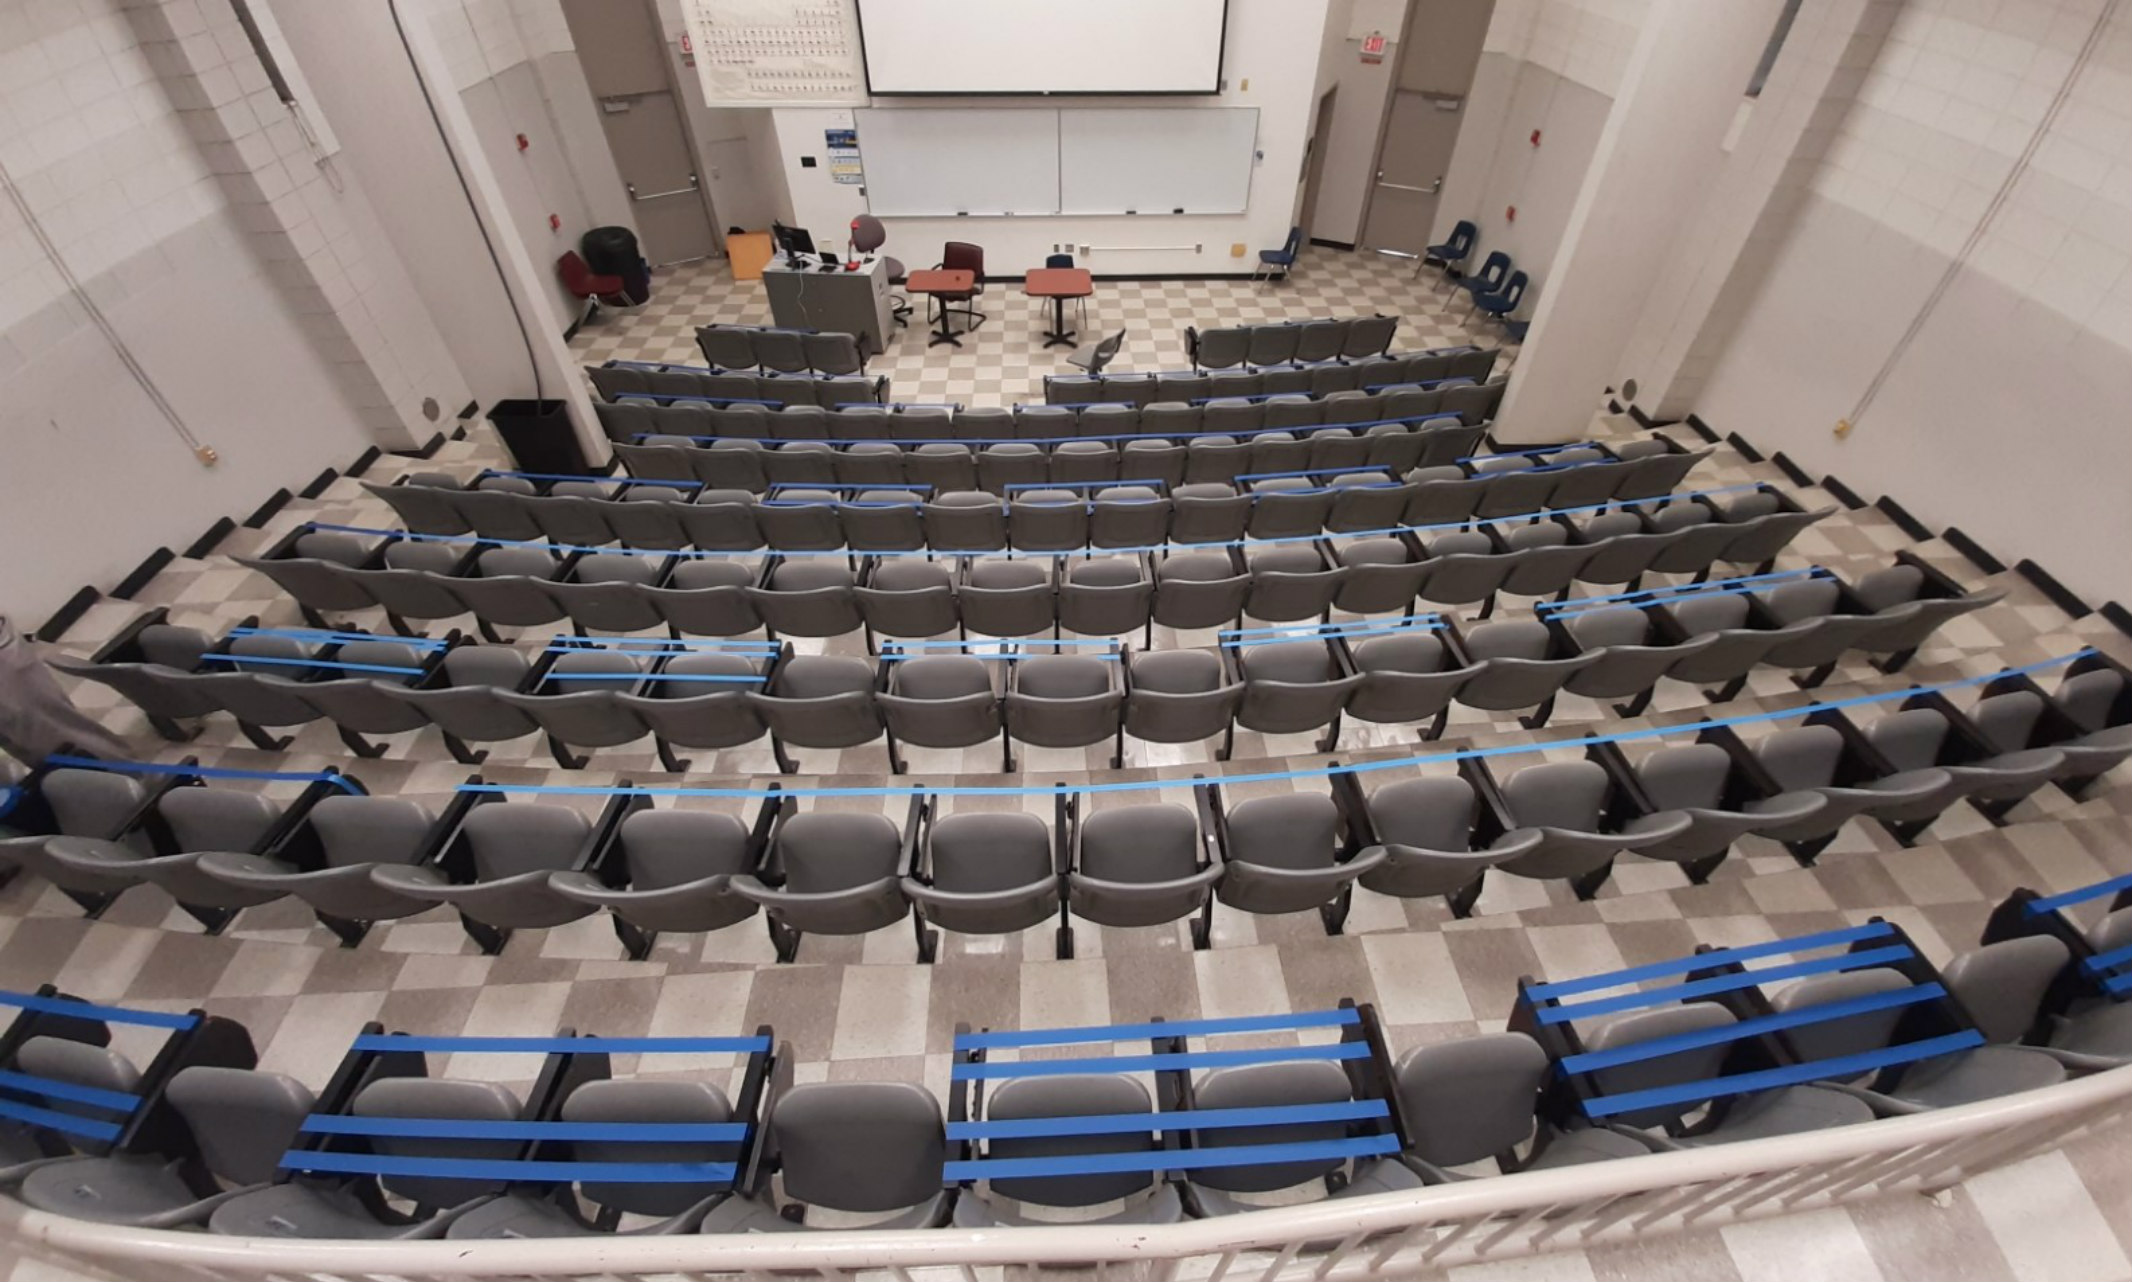 2020 University Of Missouri Kansas City - roblox escape room theater seating problem